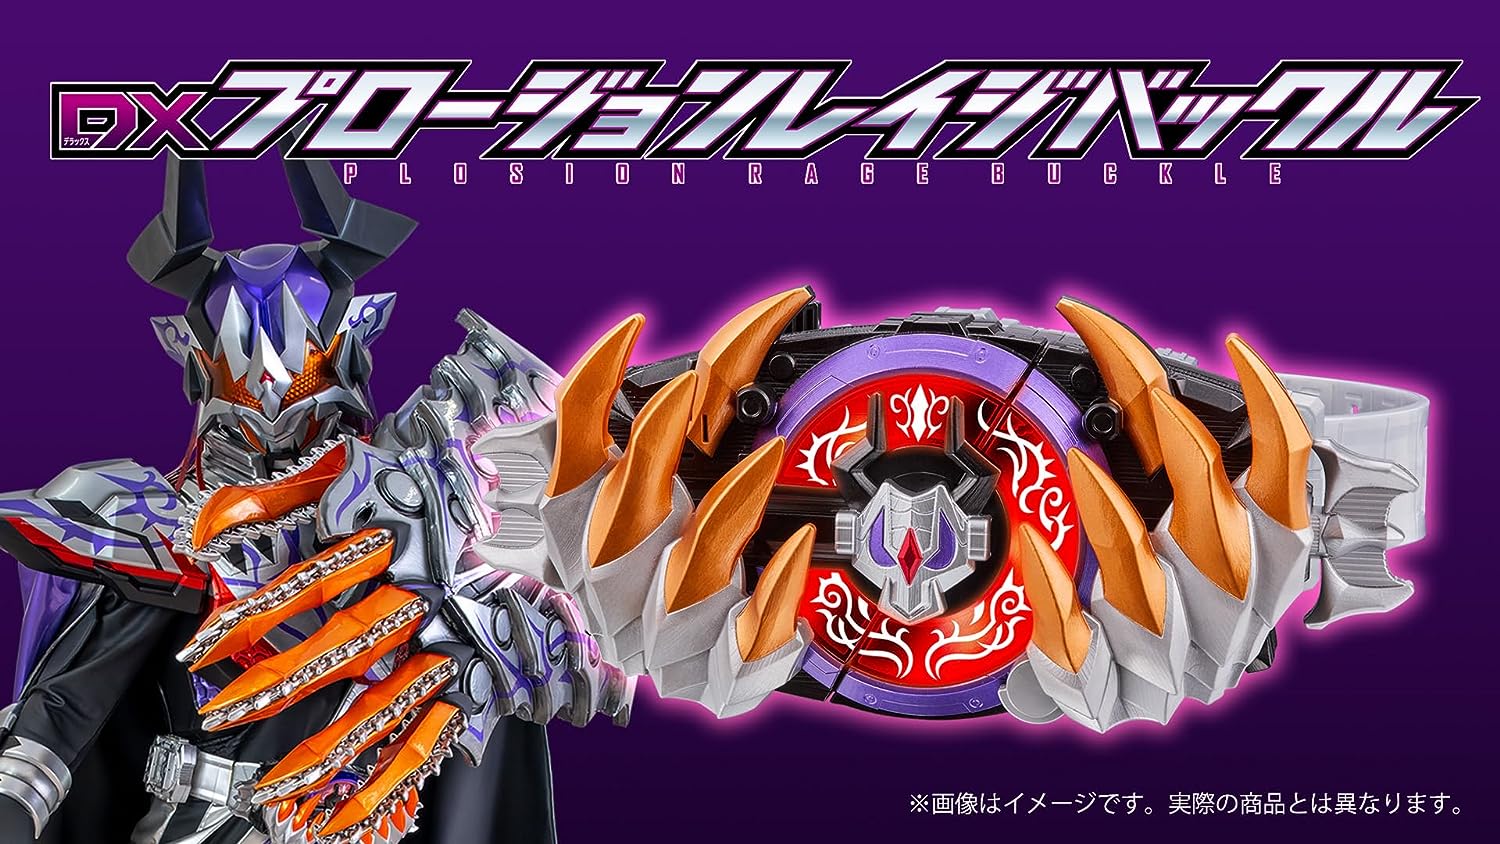 Tokullectibles :: Super Sentai & Kamen Rider Toys & Merchandise